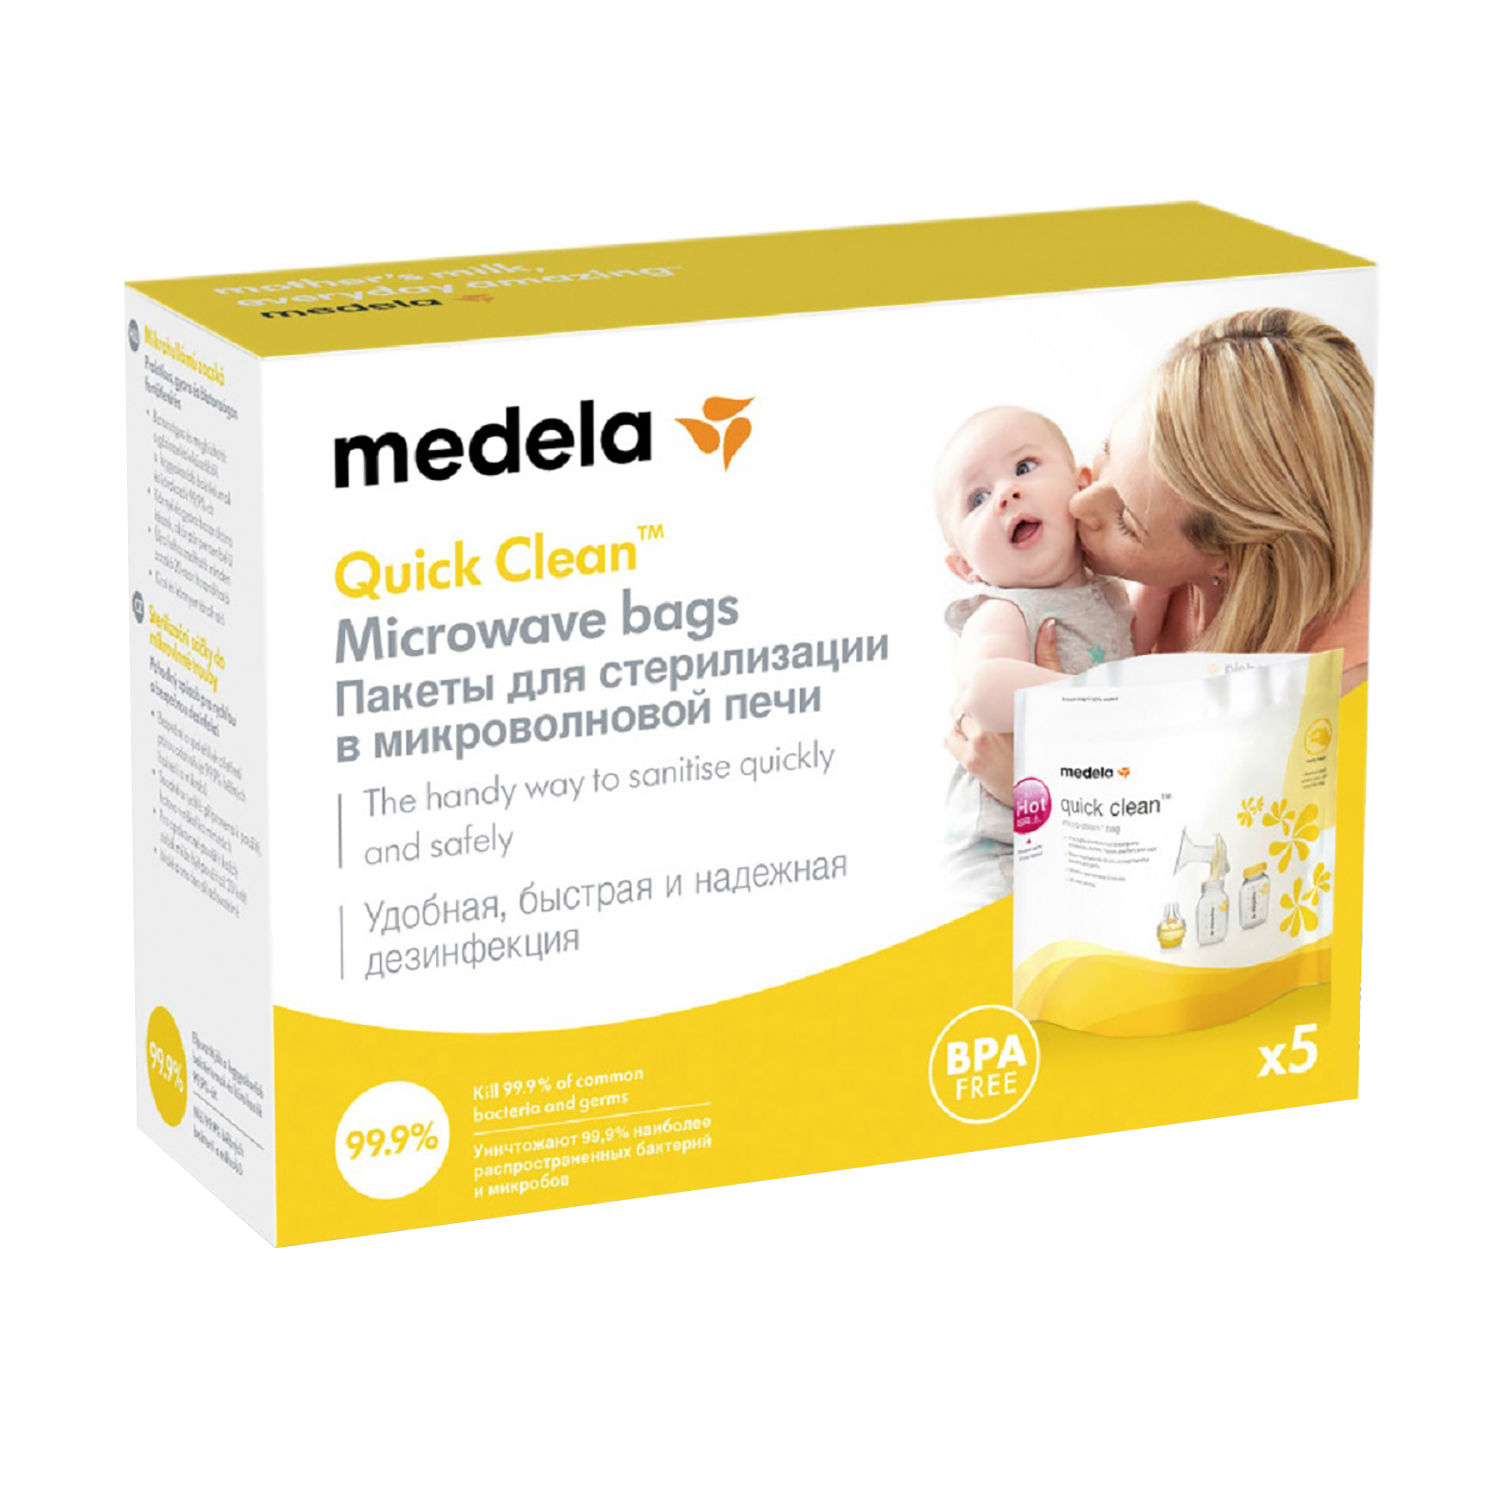 Пакеты для стерилизации Medela в СВЧ Quick Clean 5 шт - фото 2